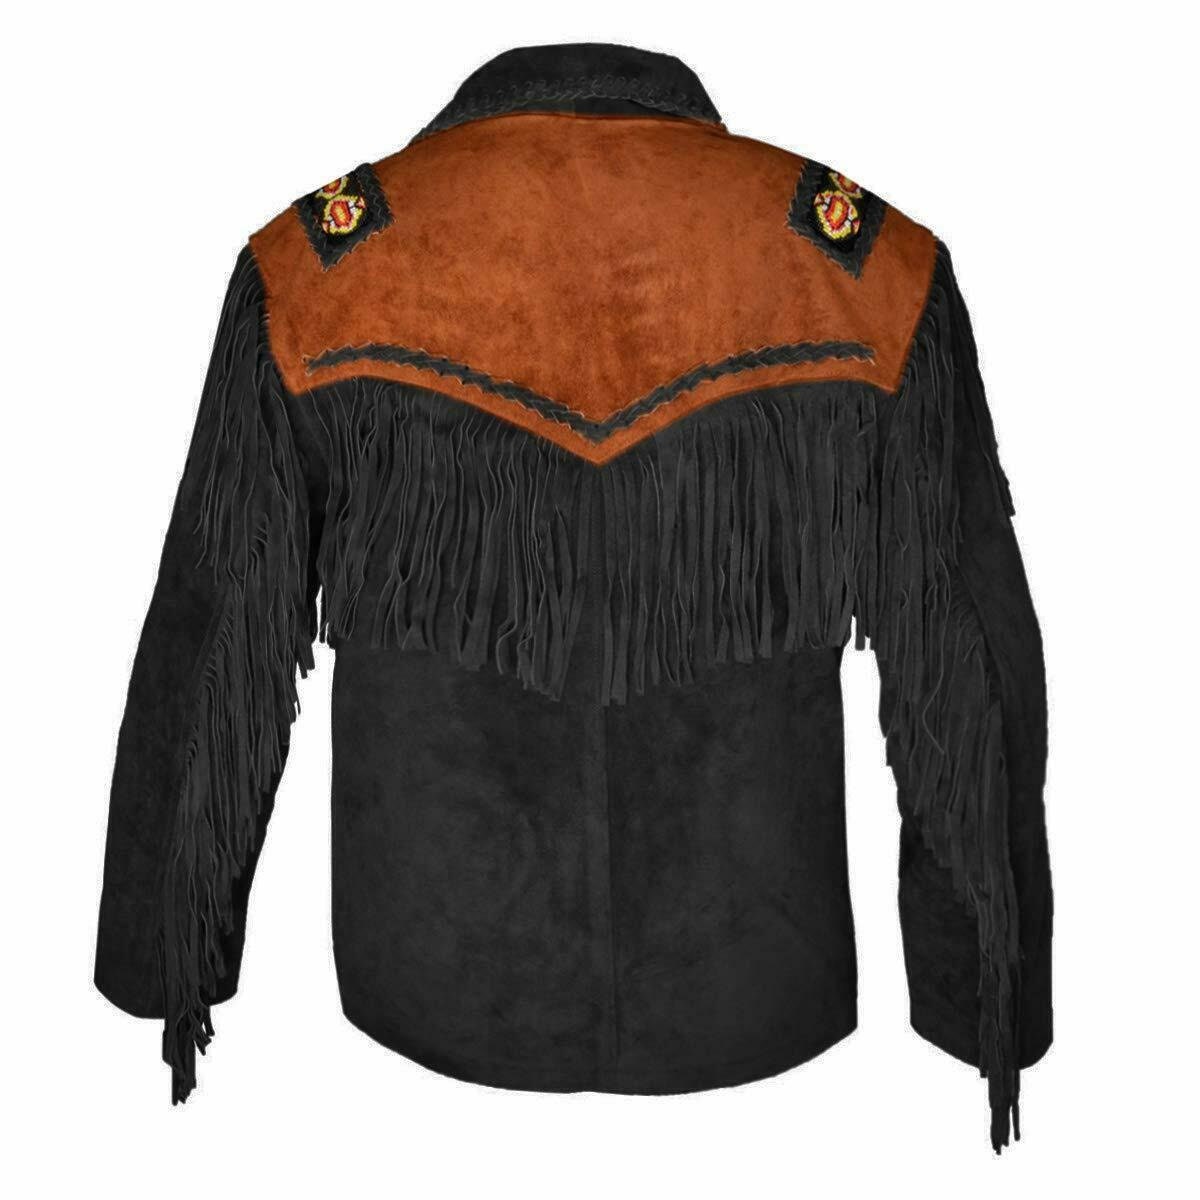 Men's Traditional Handmade Cowboy Western Leather Jacket - Etsy